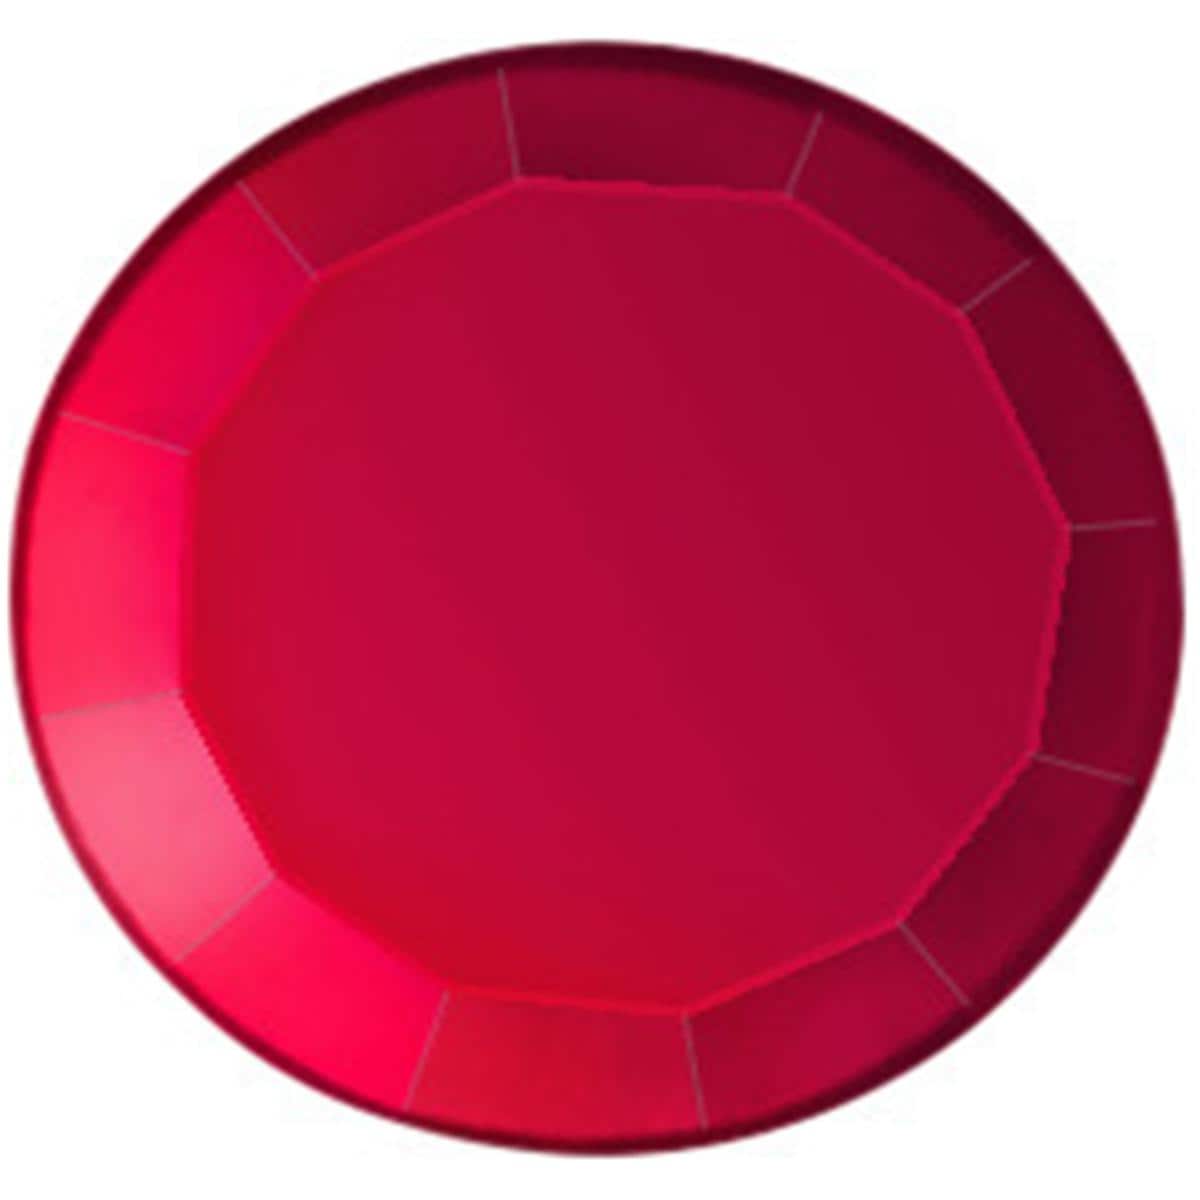 Prodental® Jewels, Ø 2,0 mm - Rot / Ruby, Packung 5 Stück